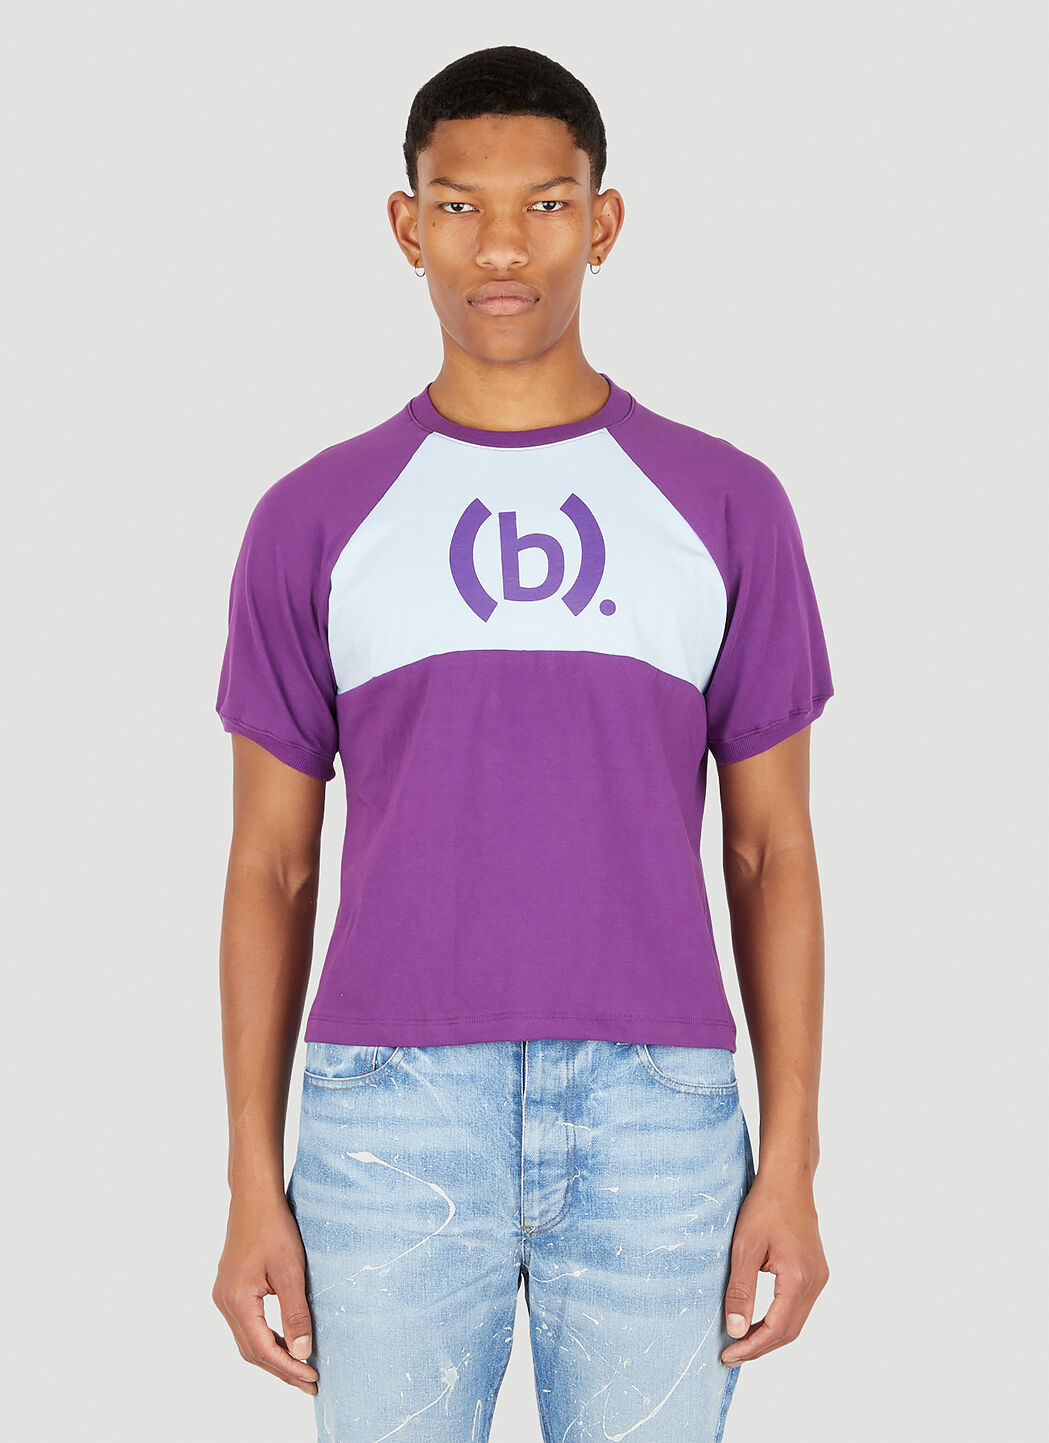 Bstroy (B). T-Shirt in Purple | LN-CC®